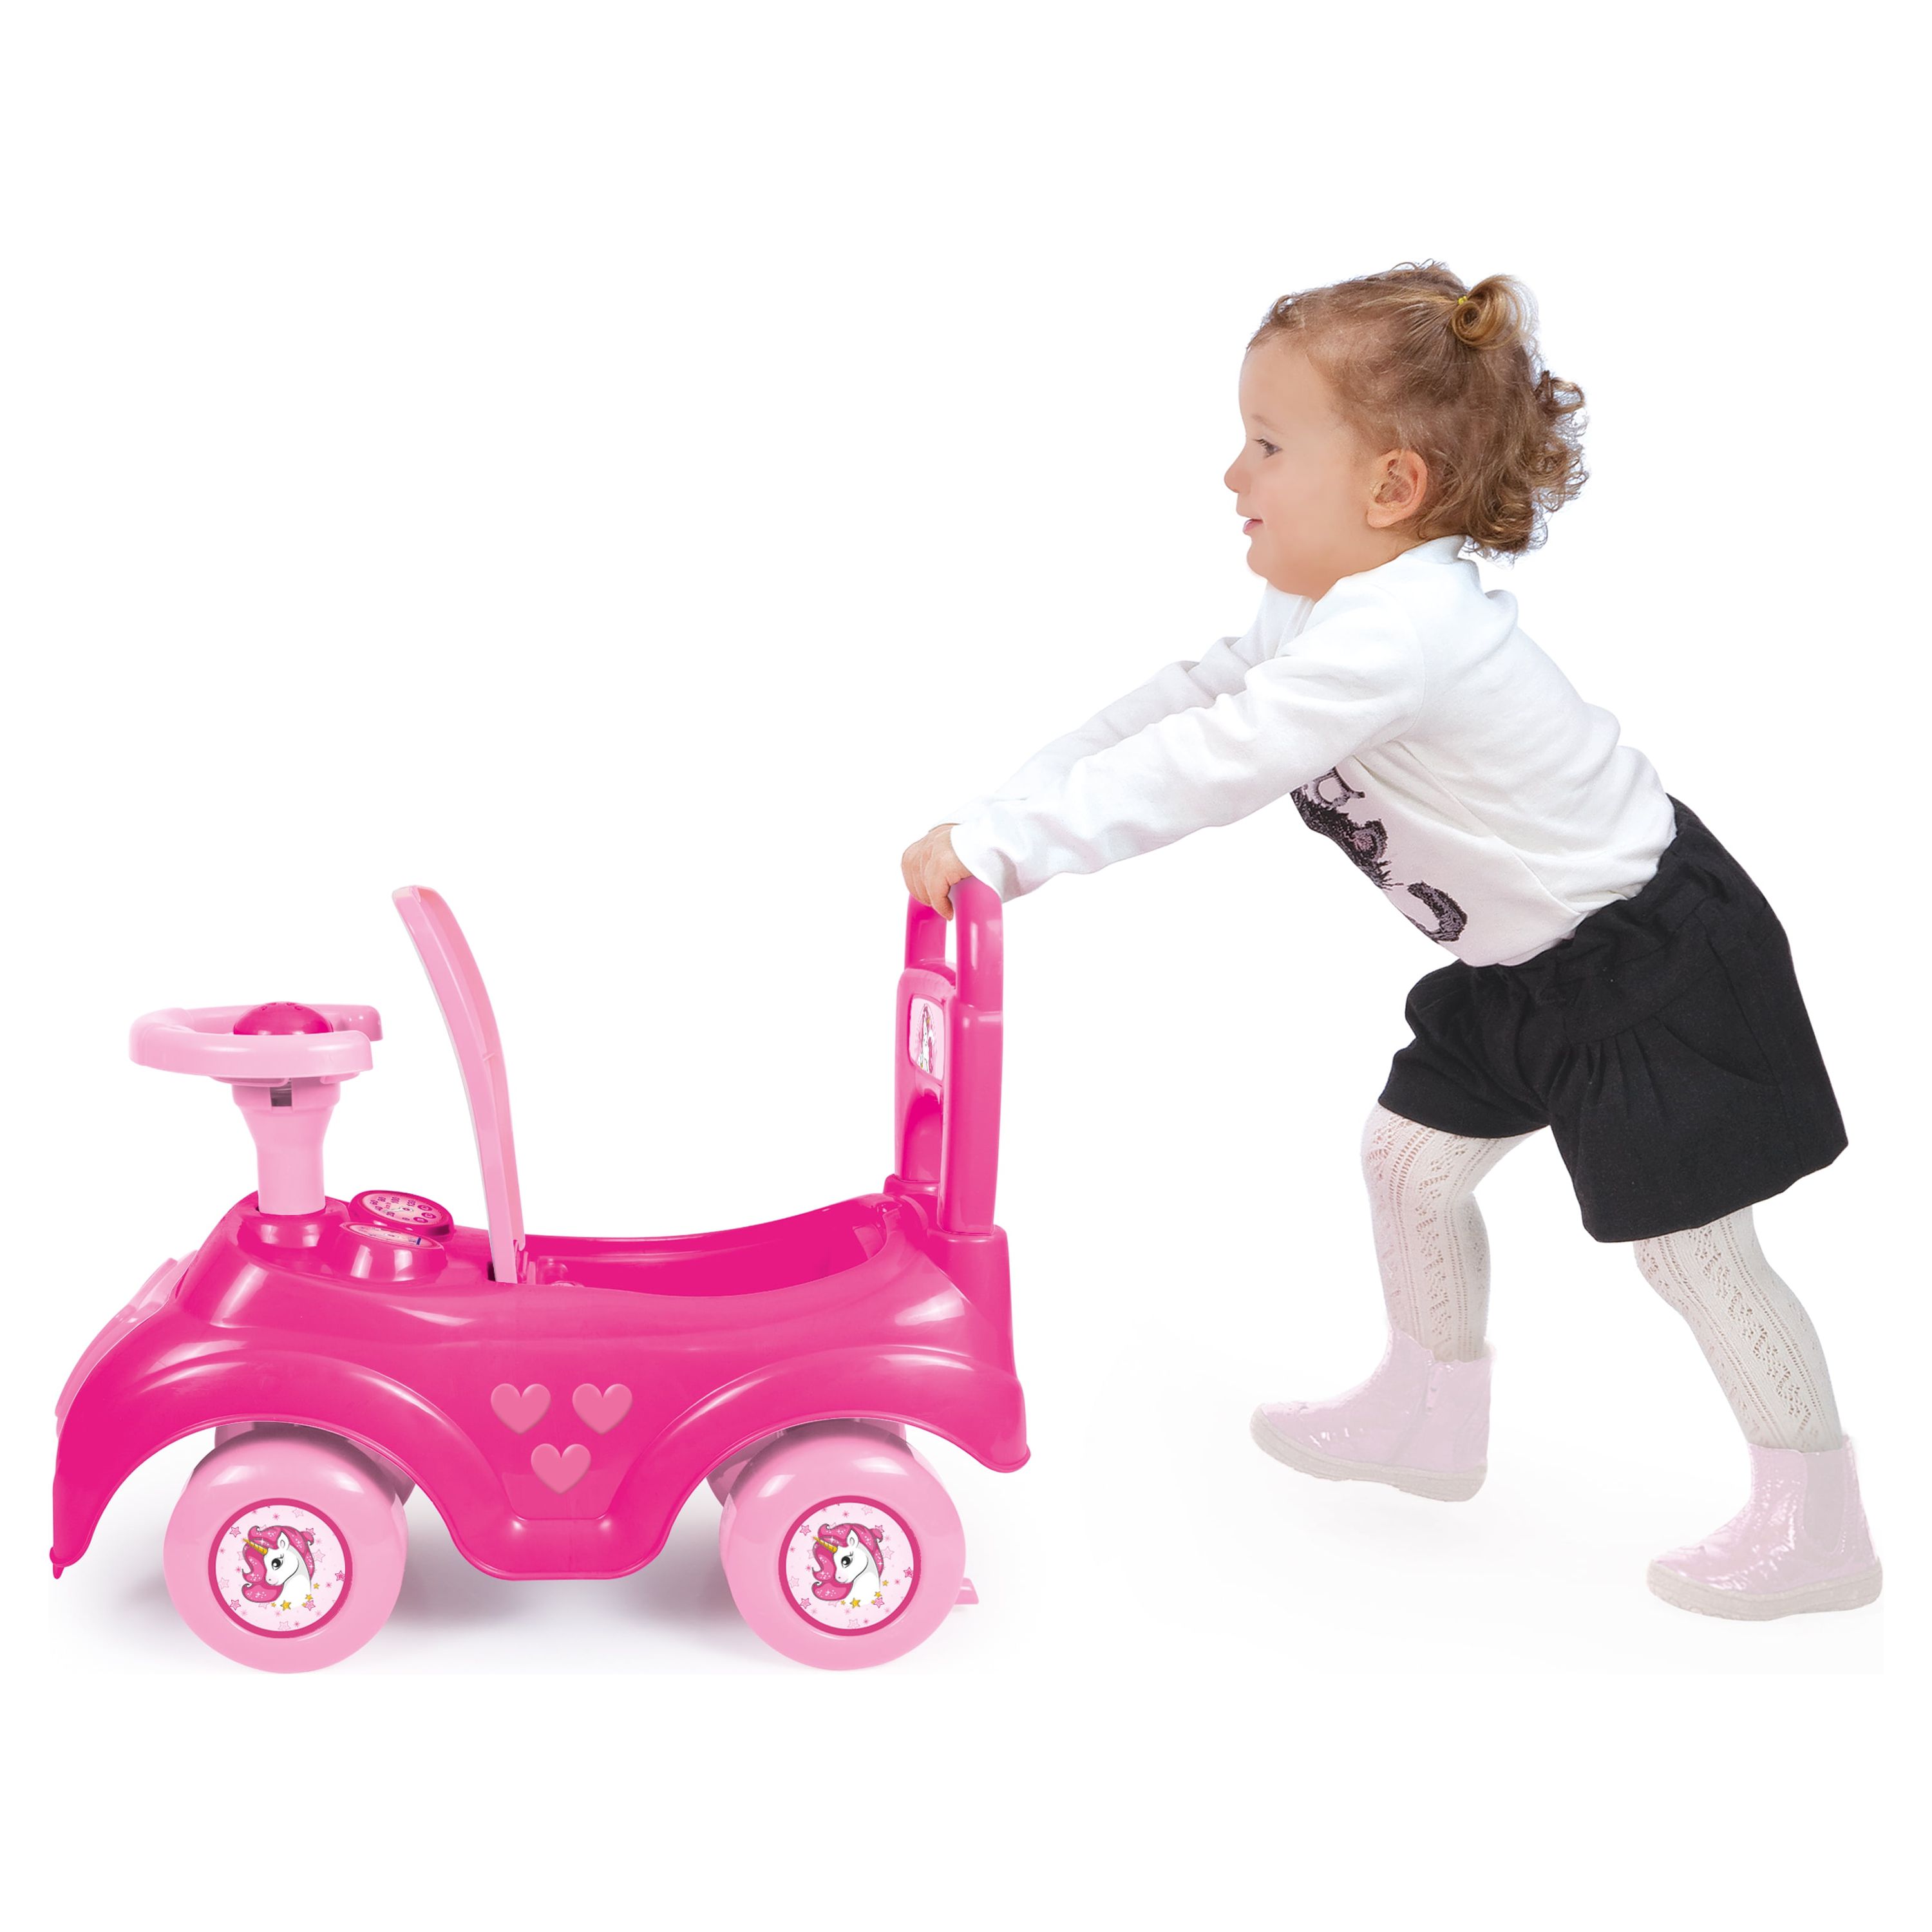 Dolu Toys - Push & Pedal Ride-on's Pink Unicorn Sit and Ride unisex - image 4 of 4